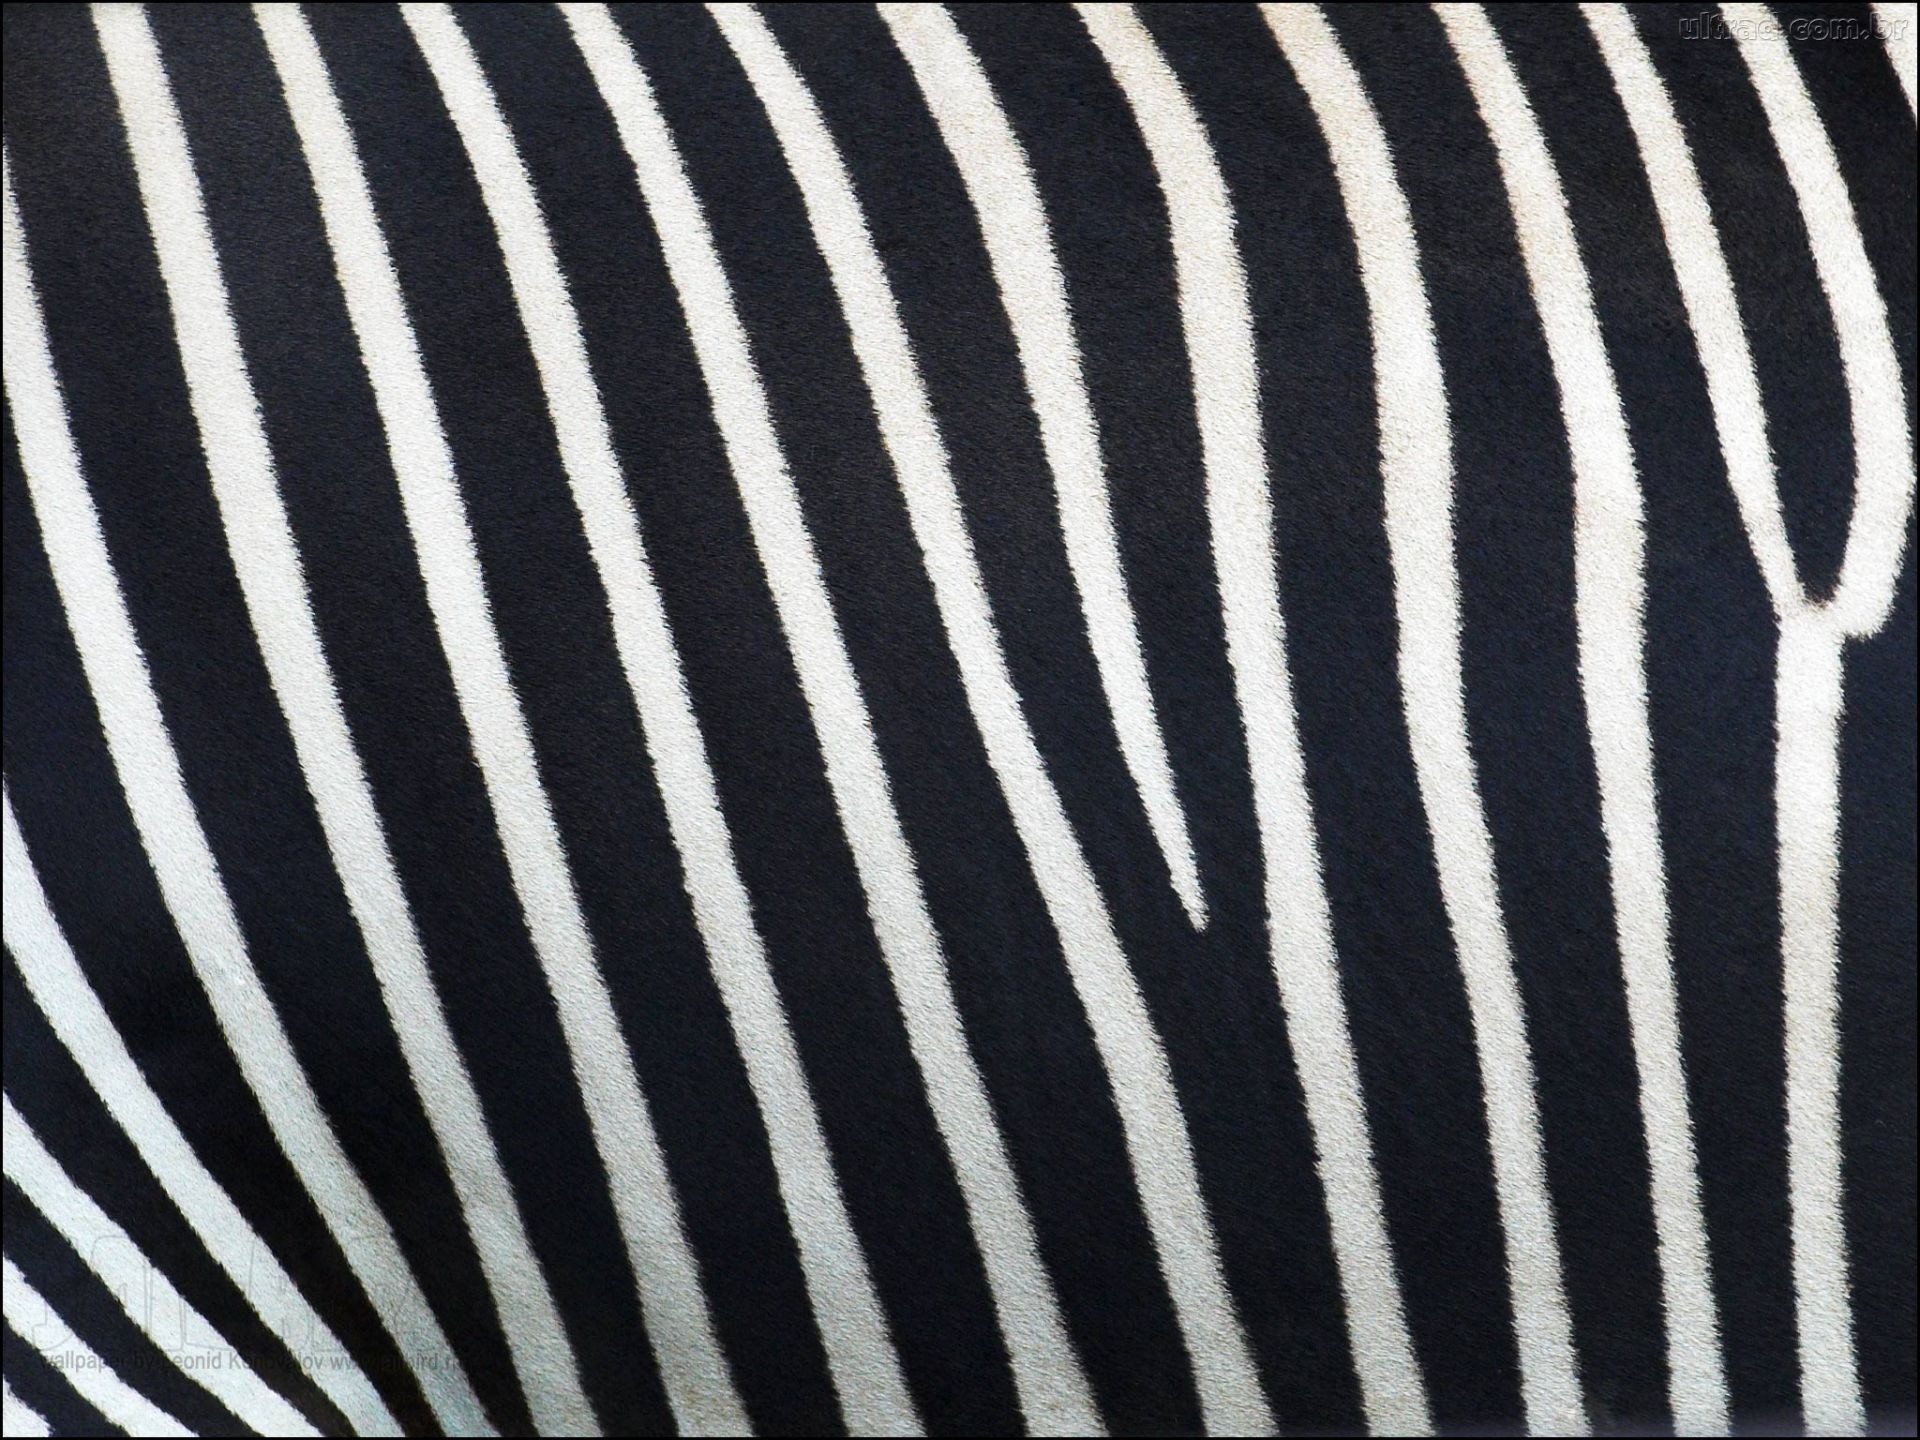 Compare striped ebony with zebra wood